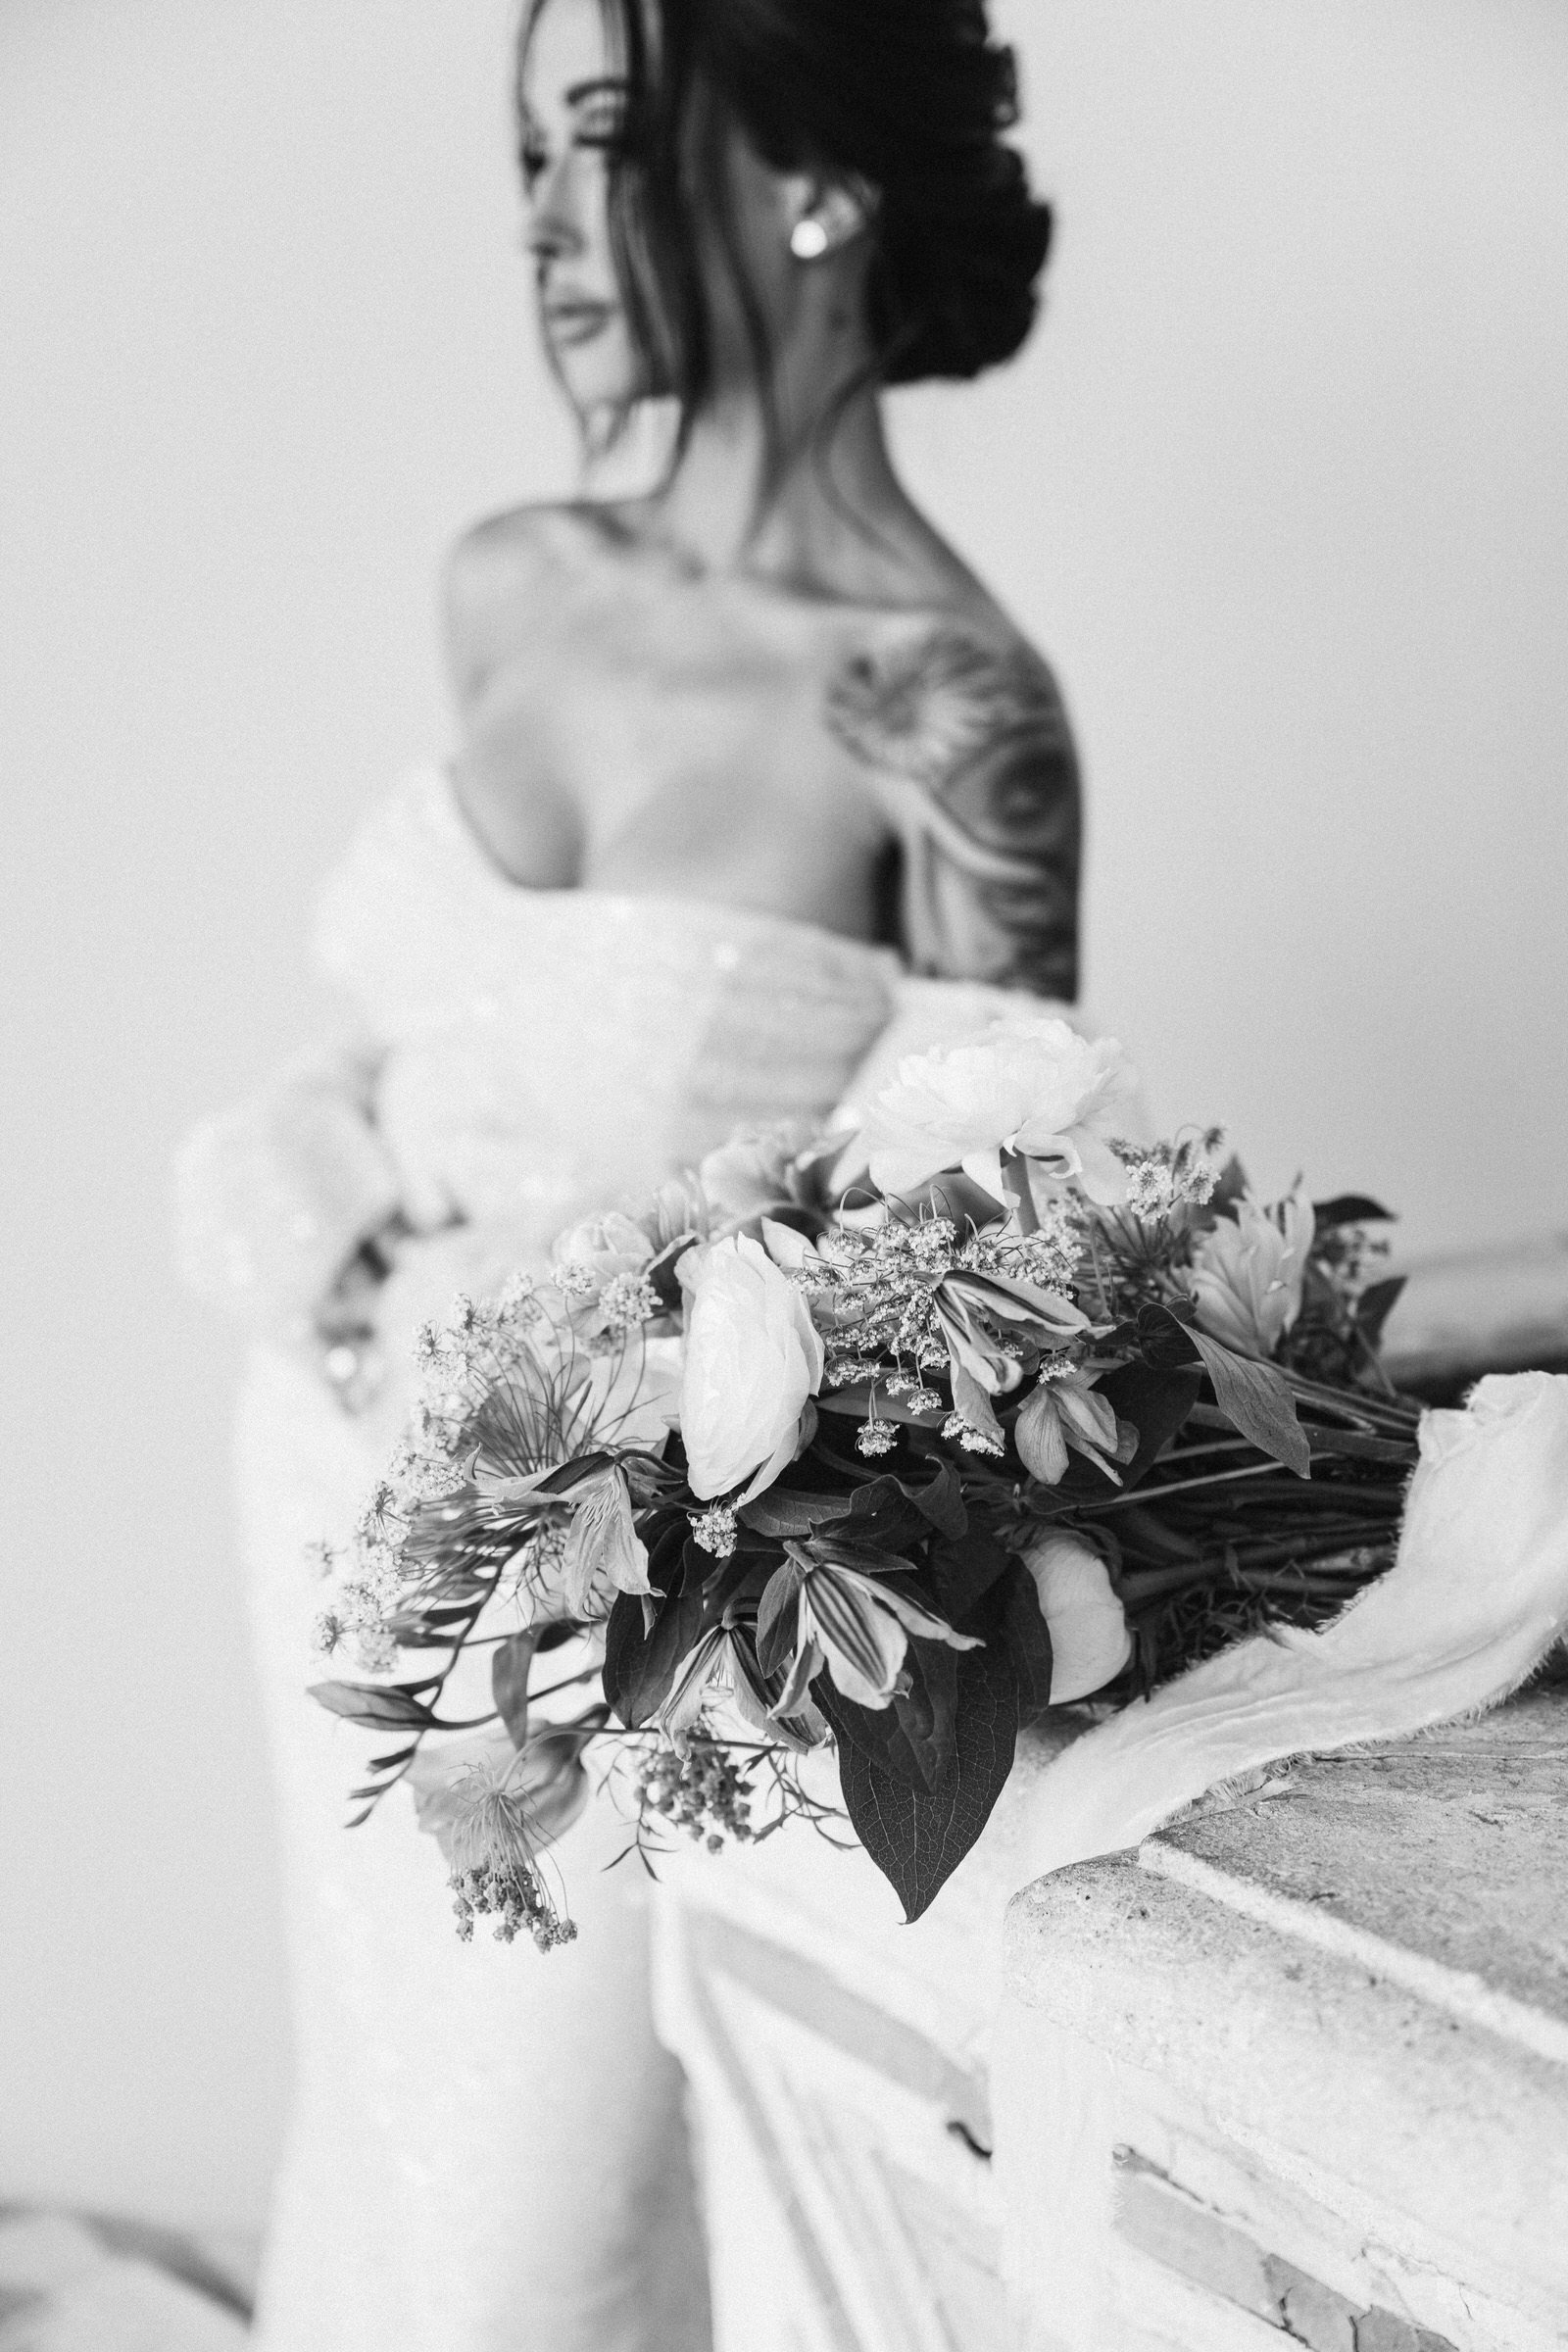 Copyright-Dewitt-for-Love-Photography-Ringling-Melanie-Paige-Events-Wedding-Photographer-41.jpg